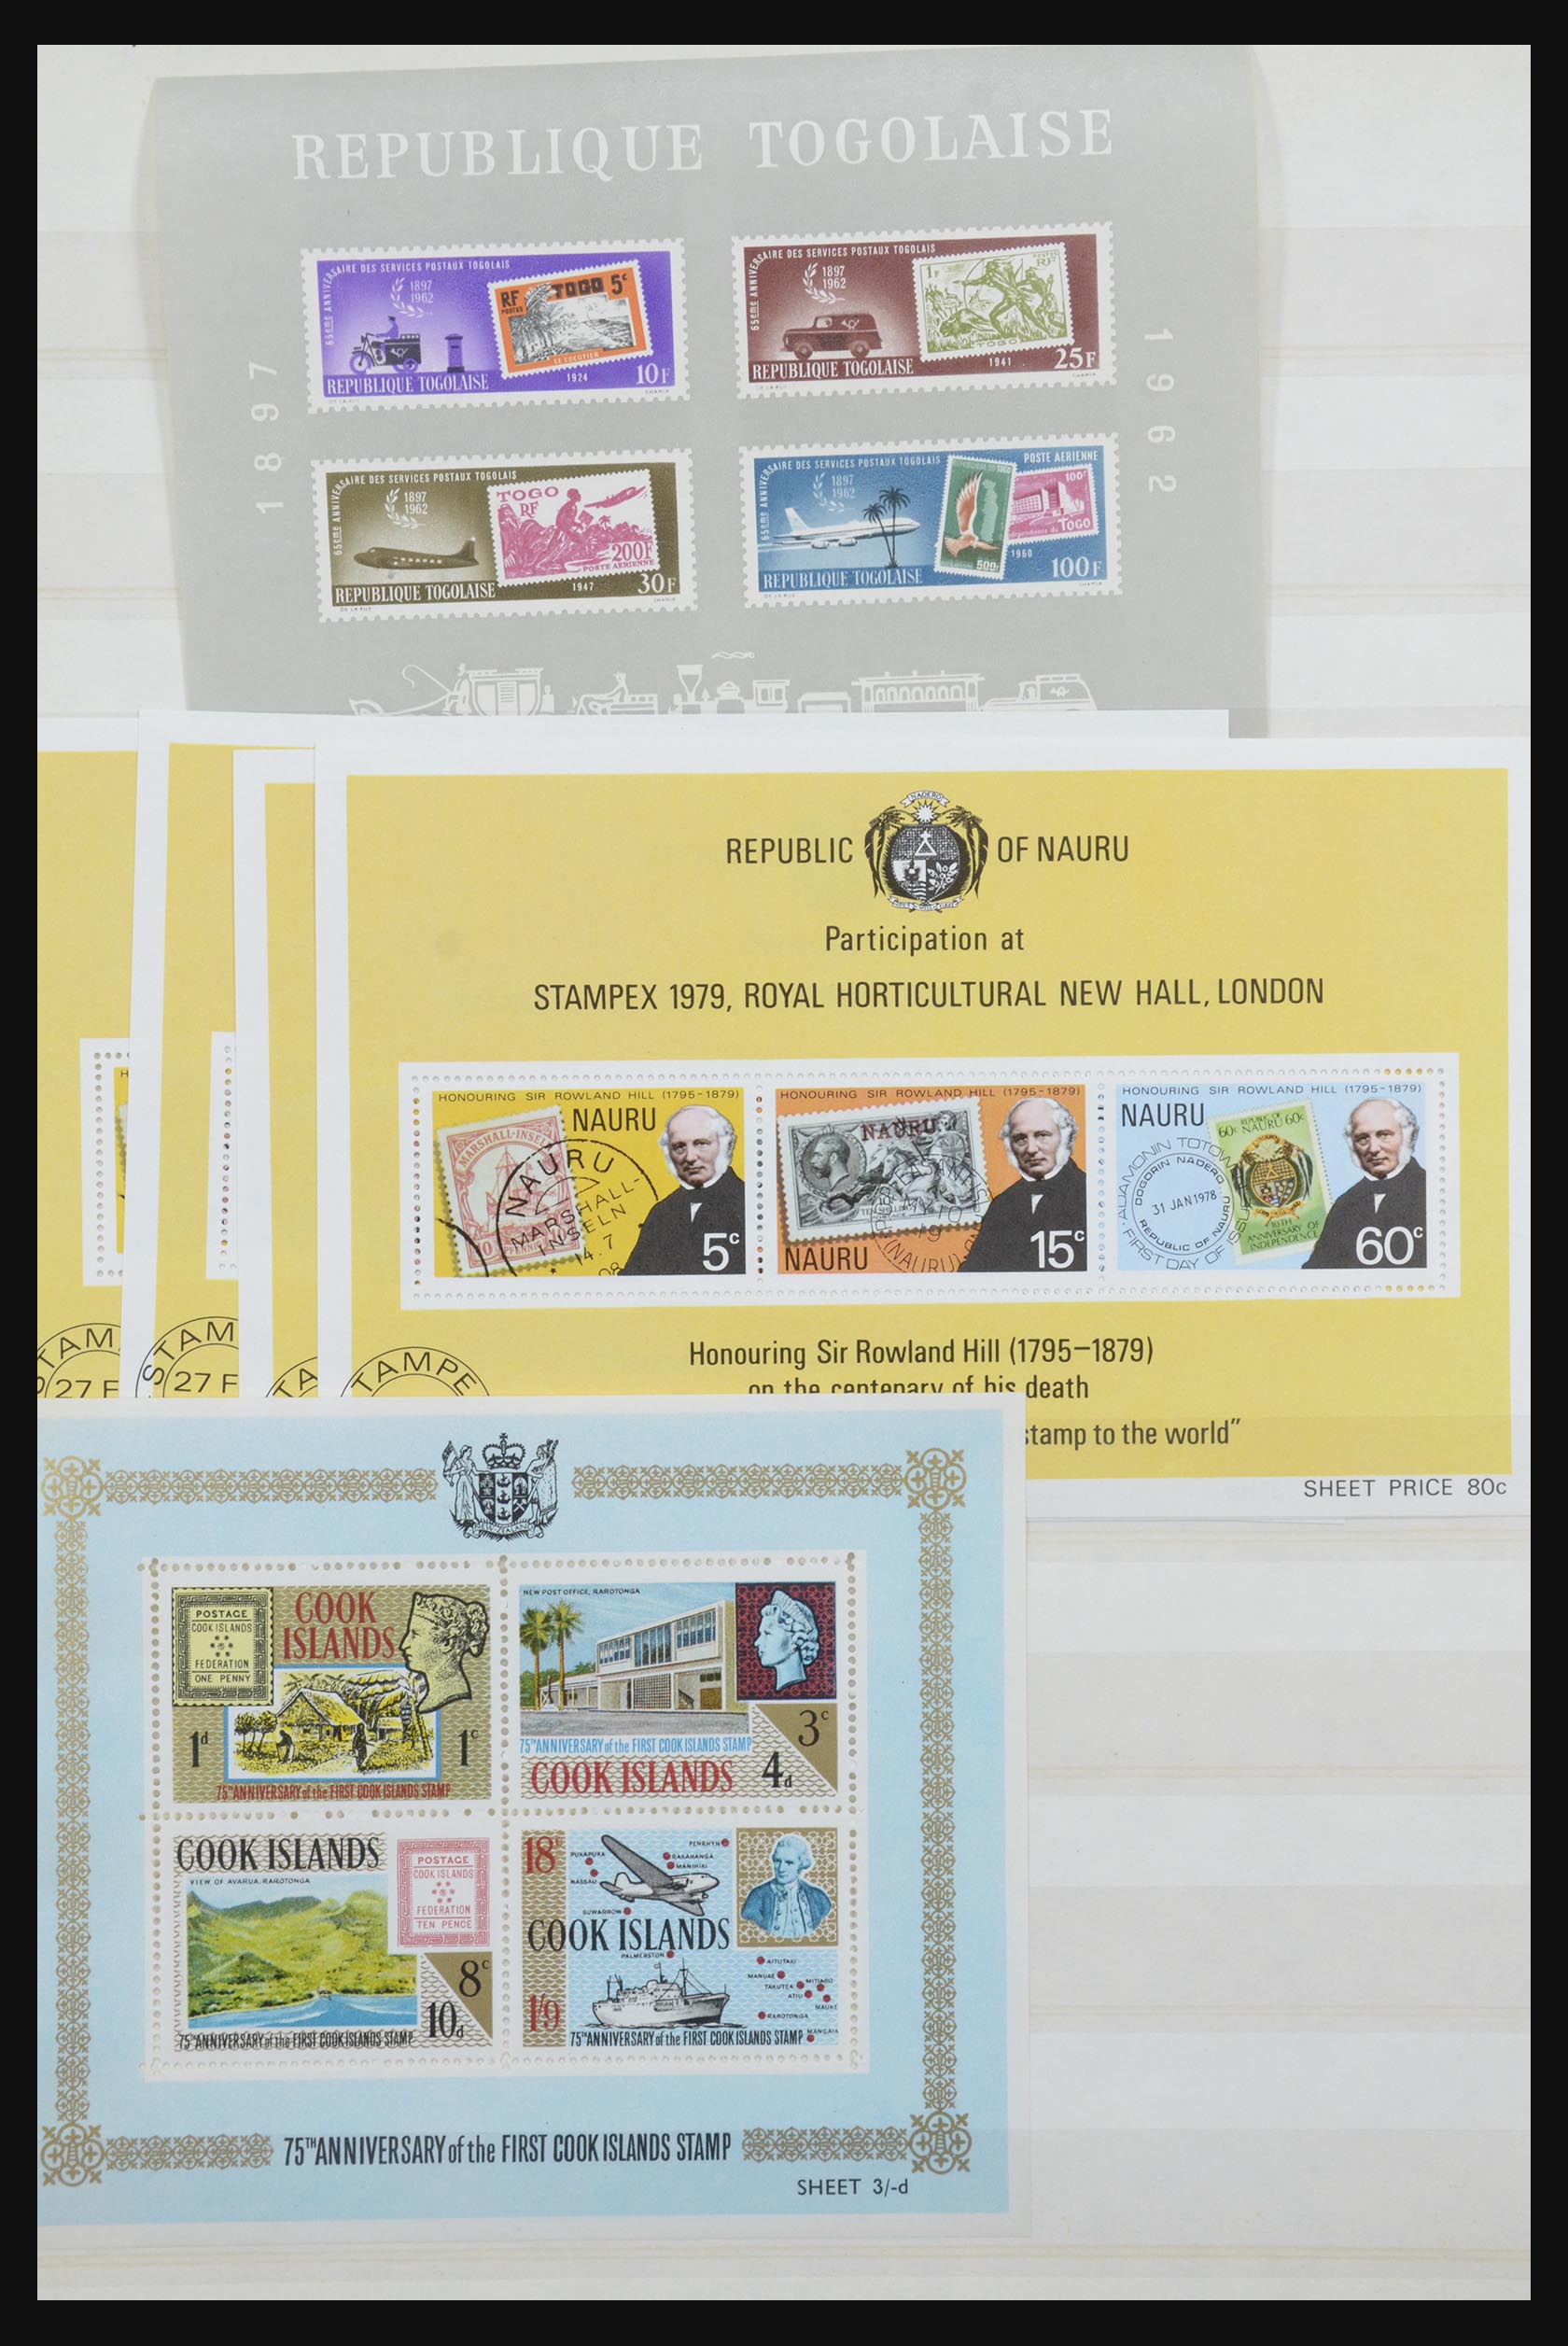 31652 022 - 31652 Motief: postzegel op postzegel 1940-1993.